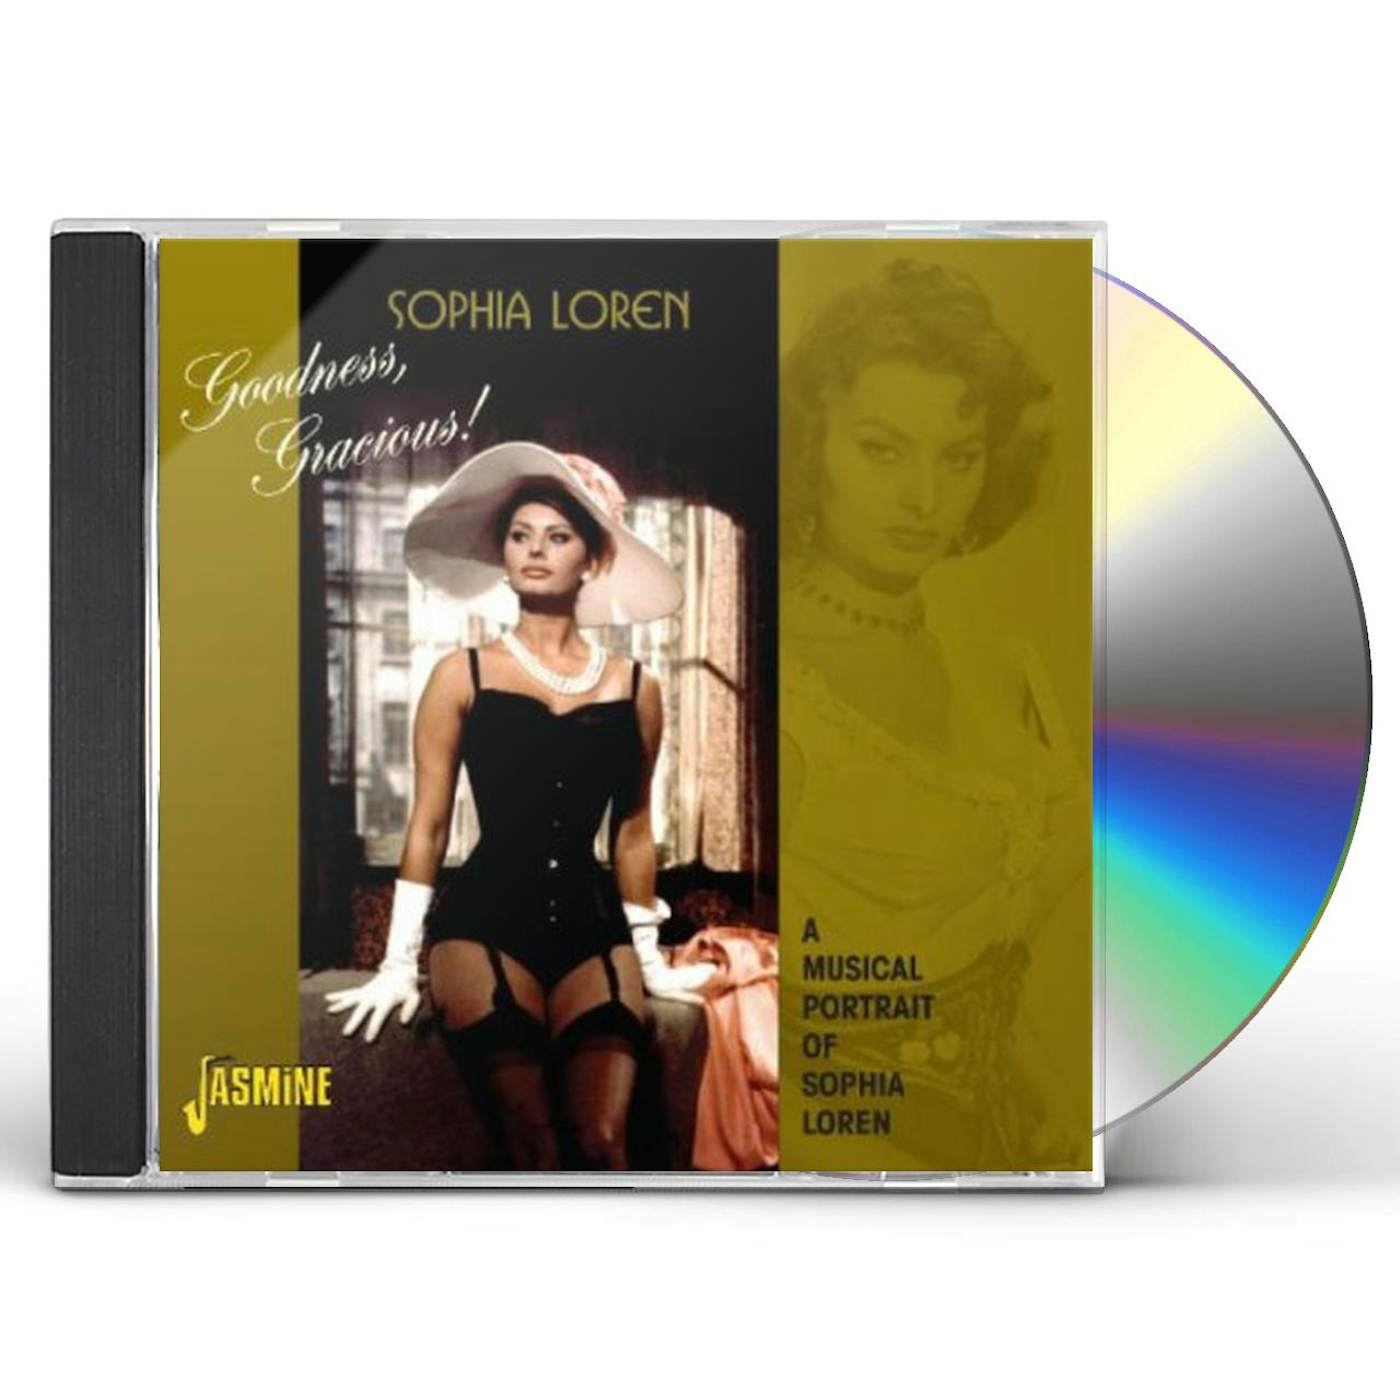 Sophia Loren GODNESS GRACIOUS CD